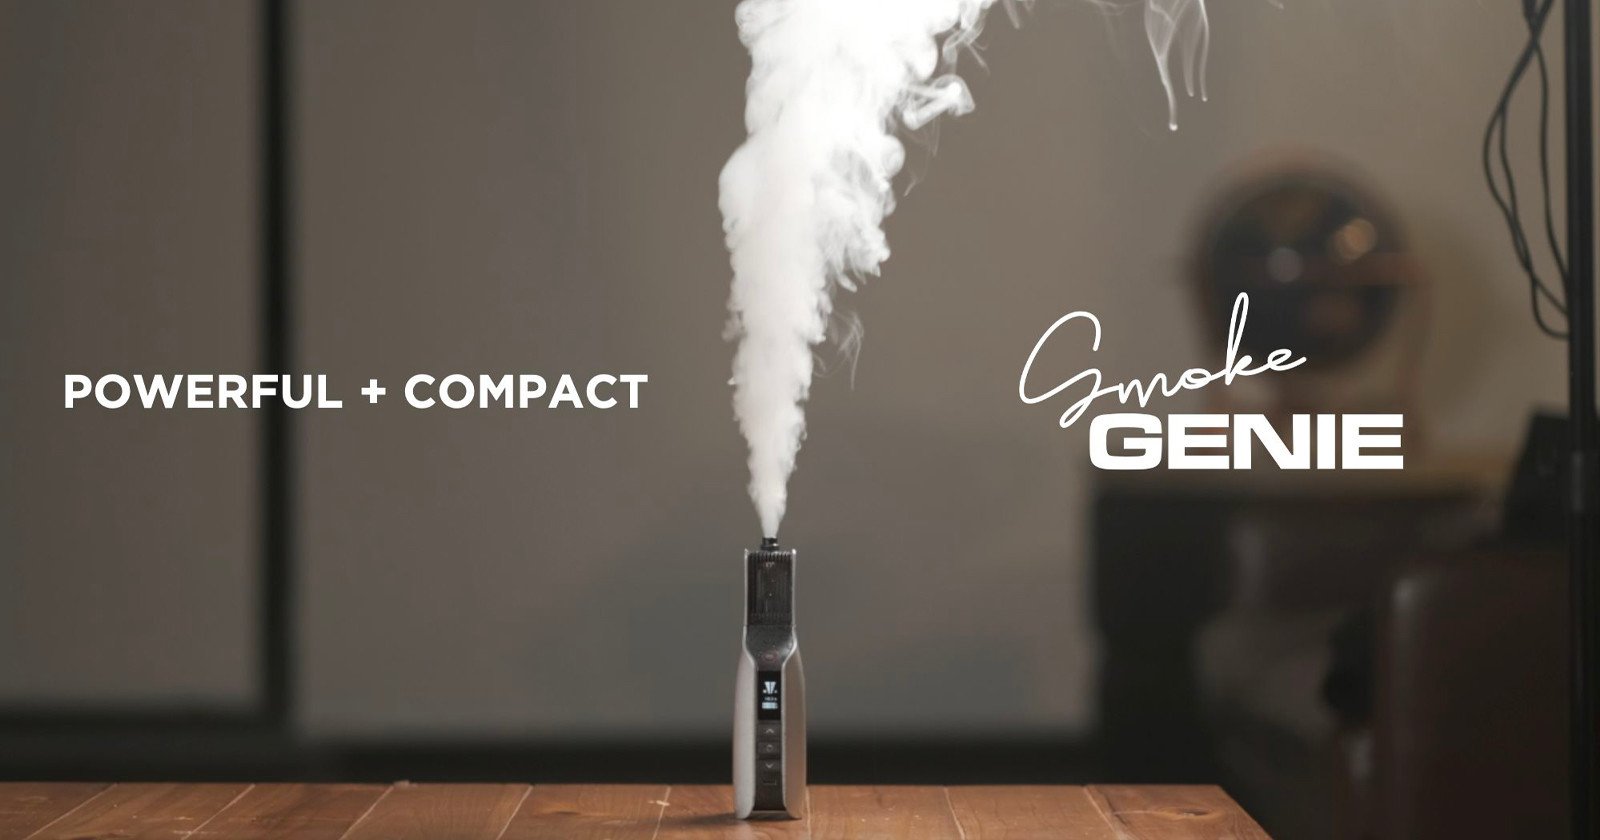 SmokeGENIE is a Powerful, Handheld, Non-Toxic Smoke Machine